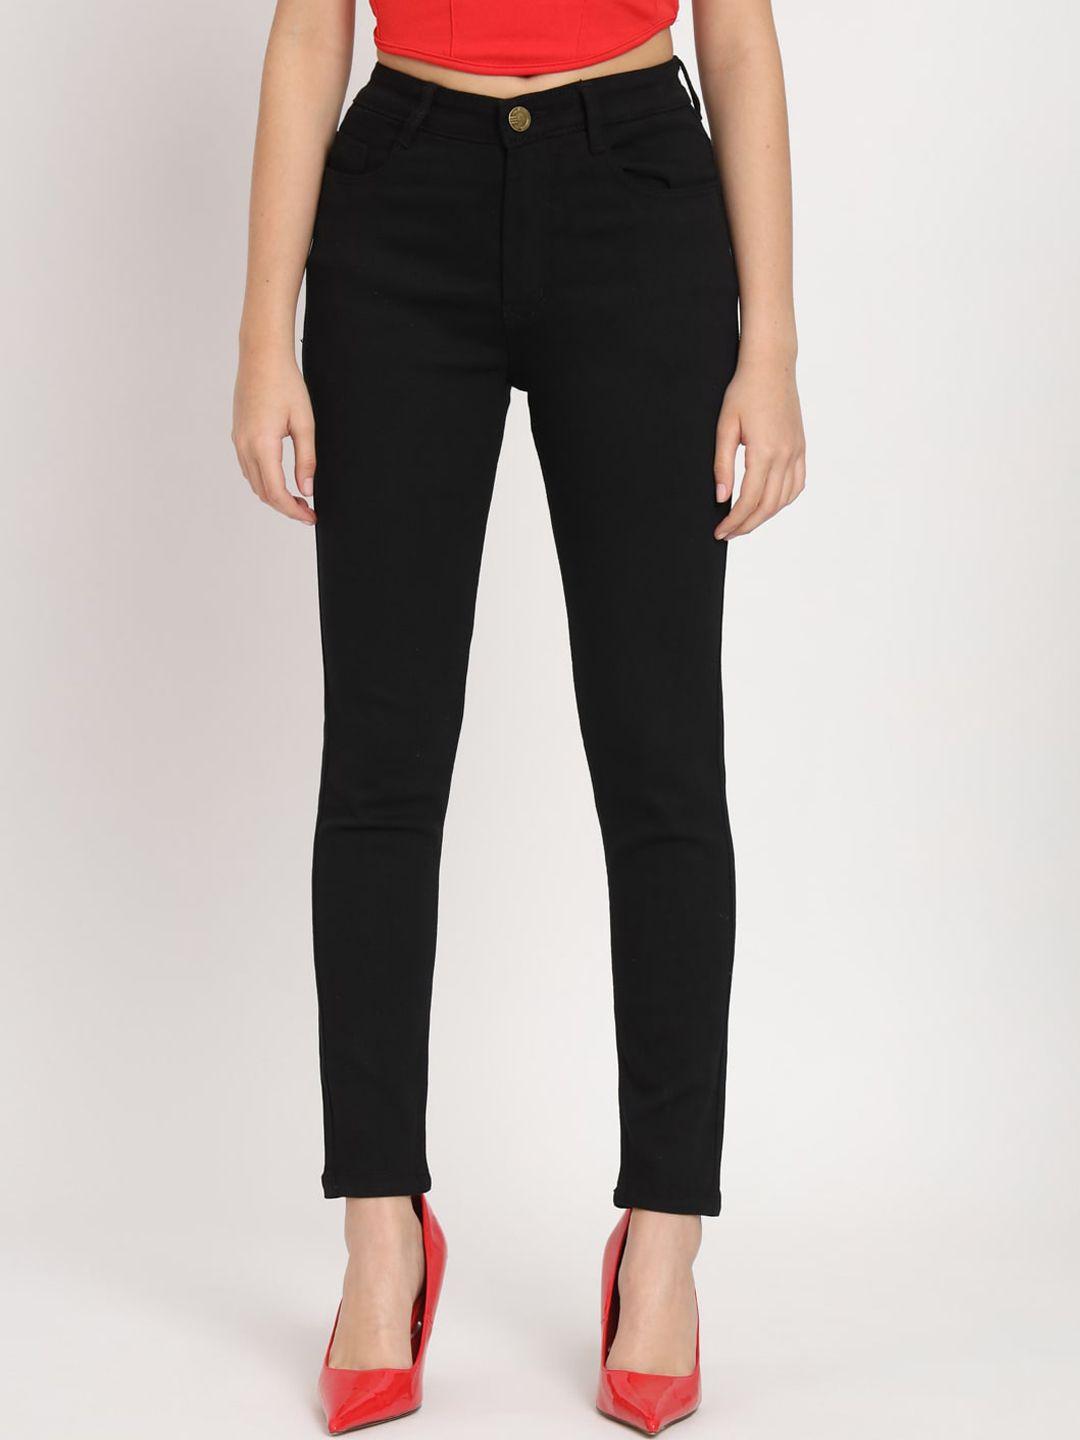 BAESD Women Jean Skinny Fit Mid-Rise Cotton Jeans